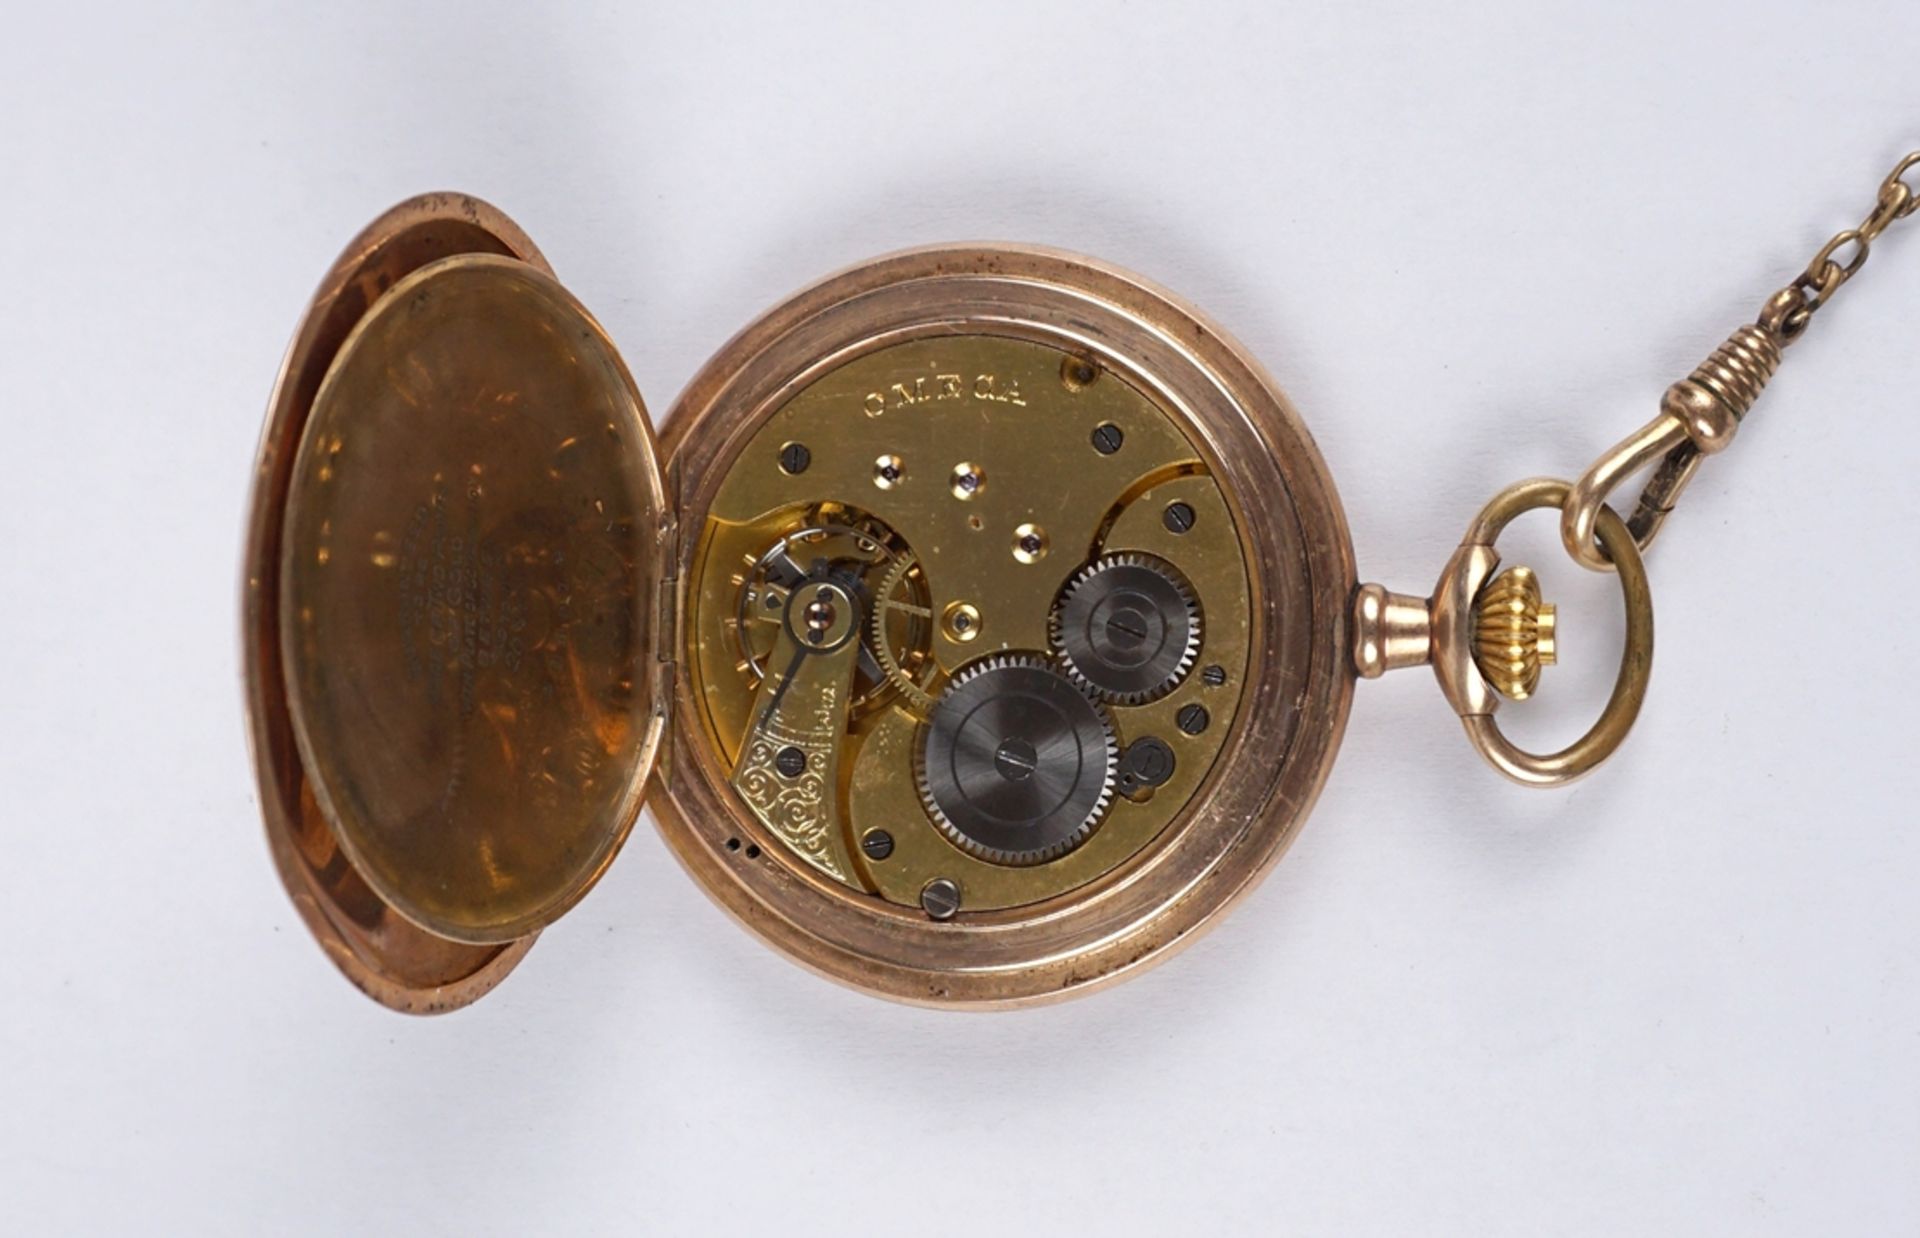 Taschenuhr Omega, 1920er/1930er Jahre, mit Uhrenkette - Image 2 of 3